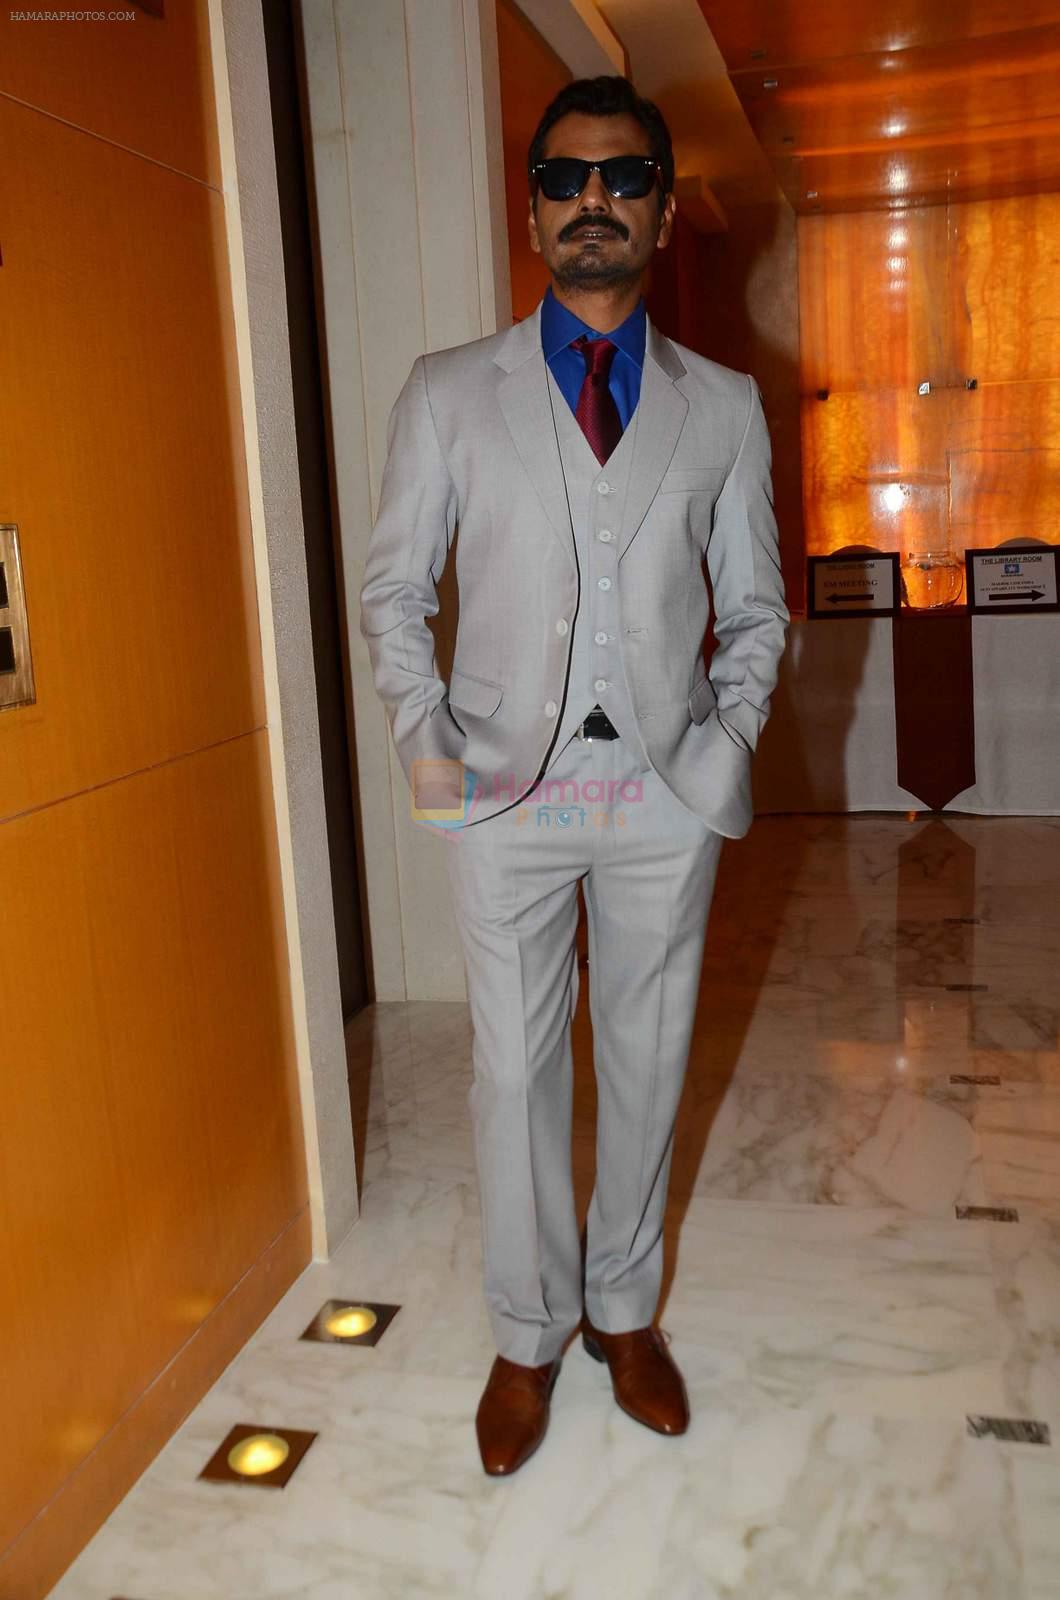 Nawazuddin Siddiqui as the brand ambassador of mayur suitings on  6th Oct 2015